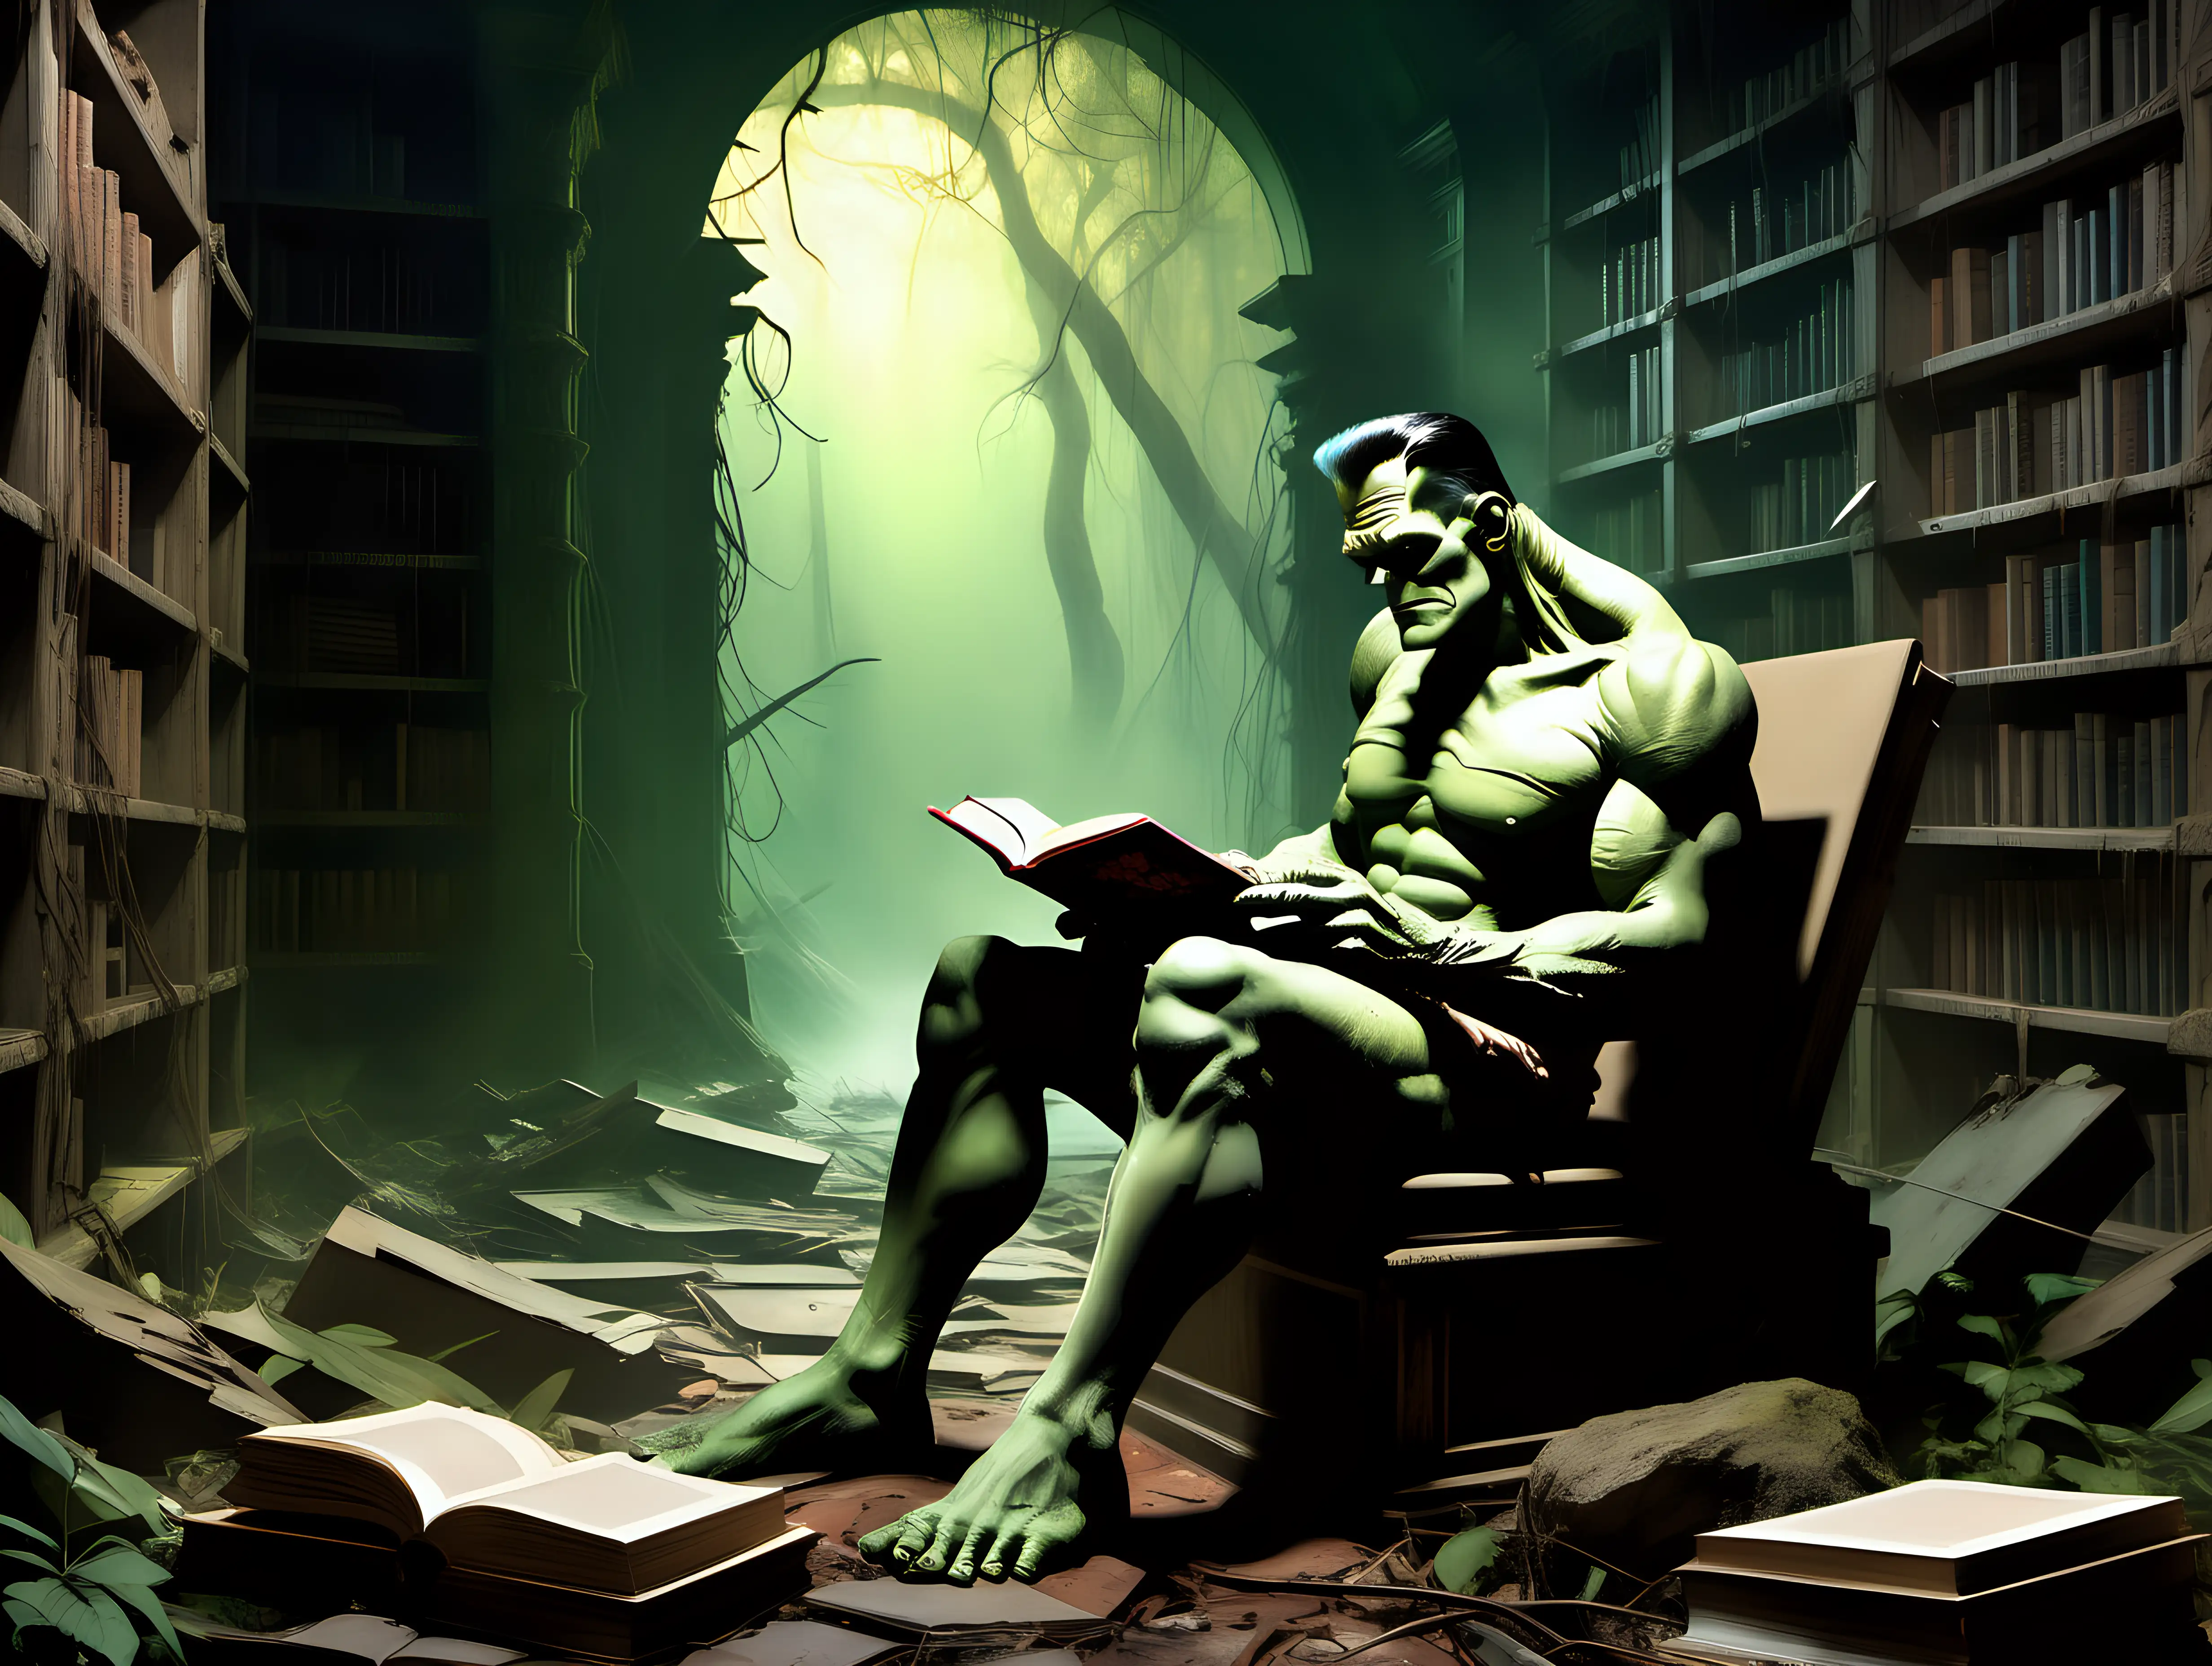 Frankenstein Reading in Abandoned Amazon Forest Library Frazetta Style